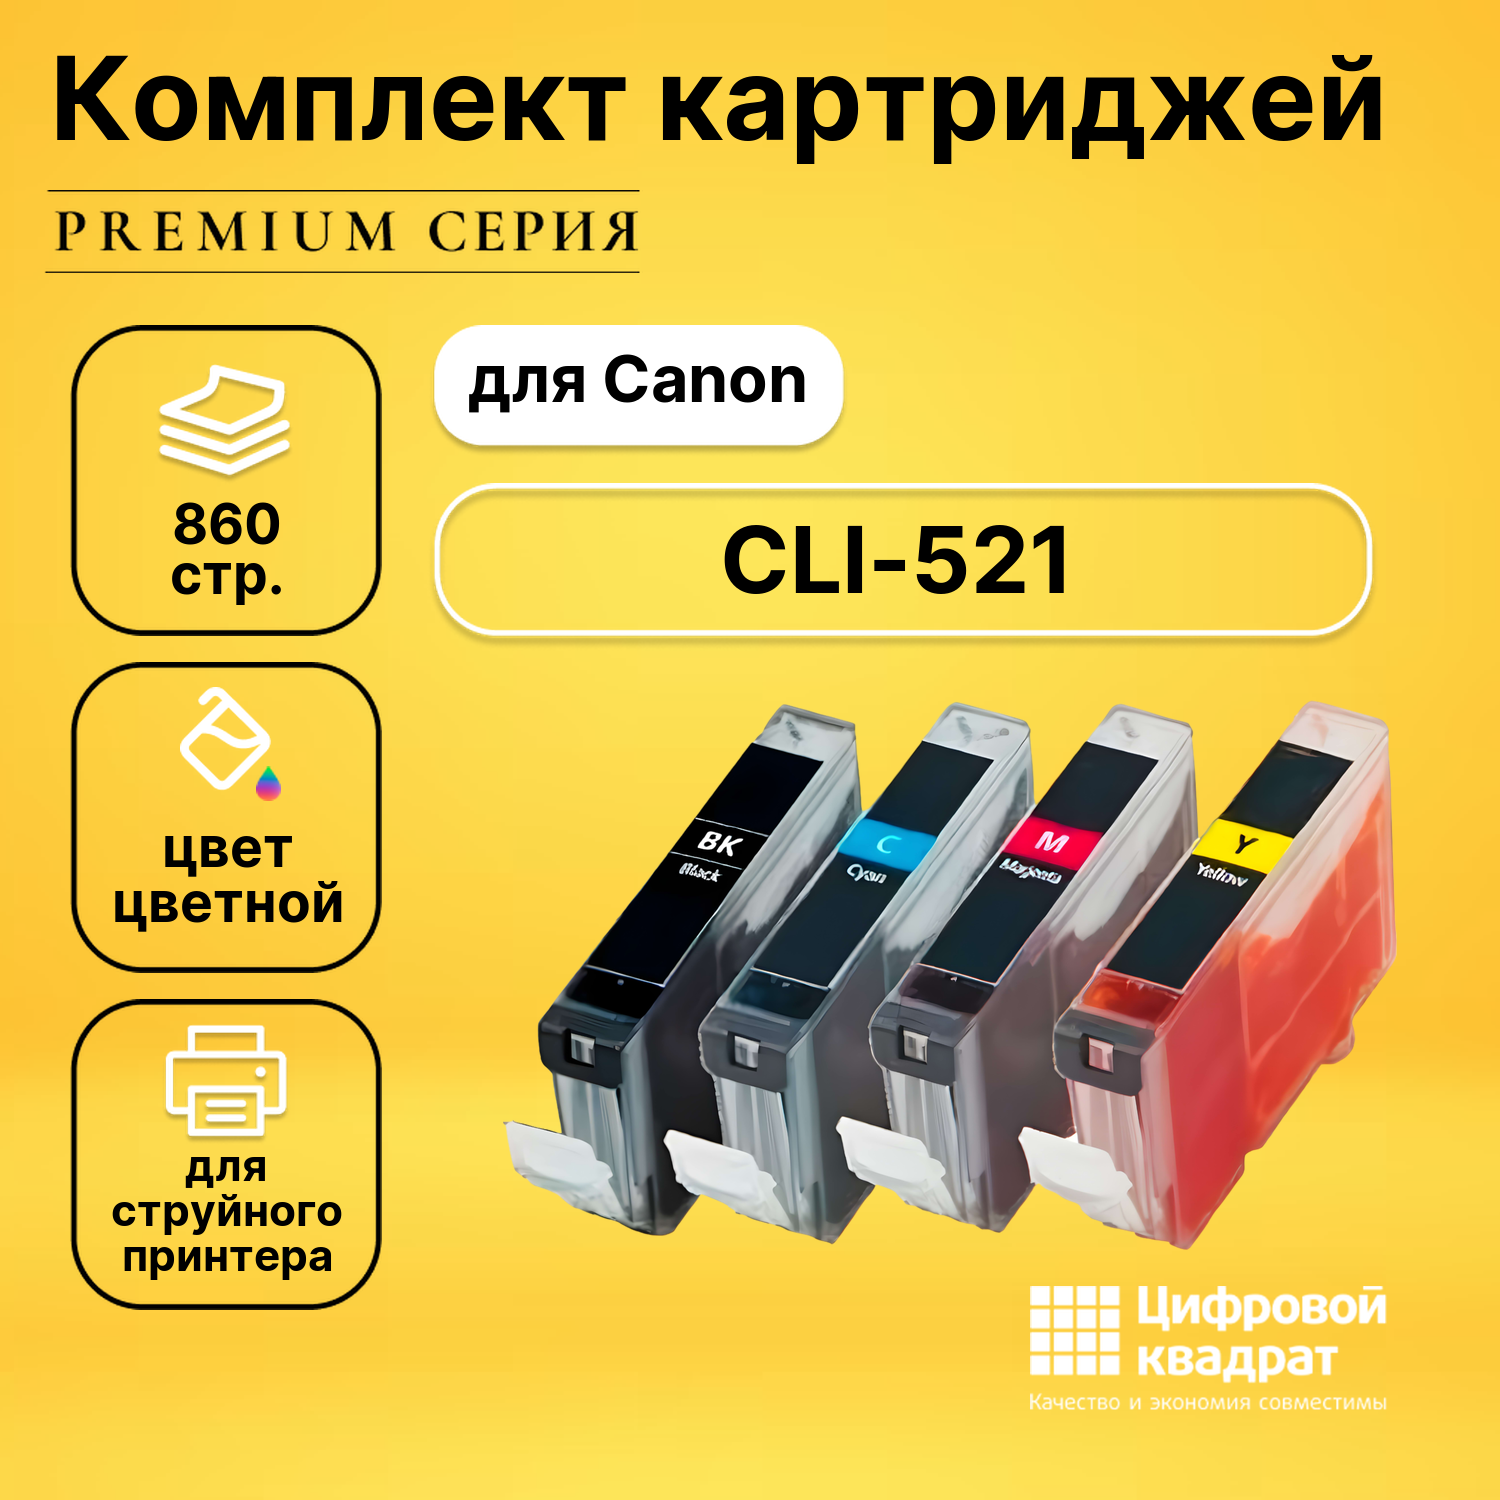 Набор картриджей DS CLI-521 Canon совместимый